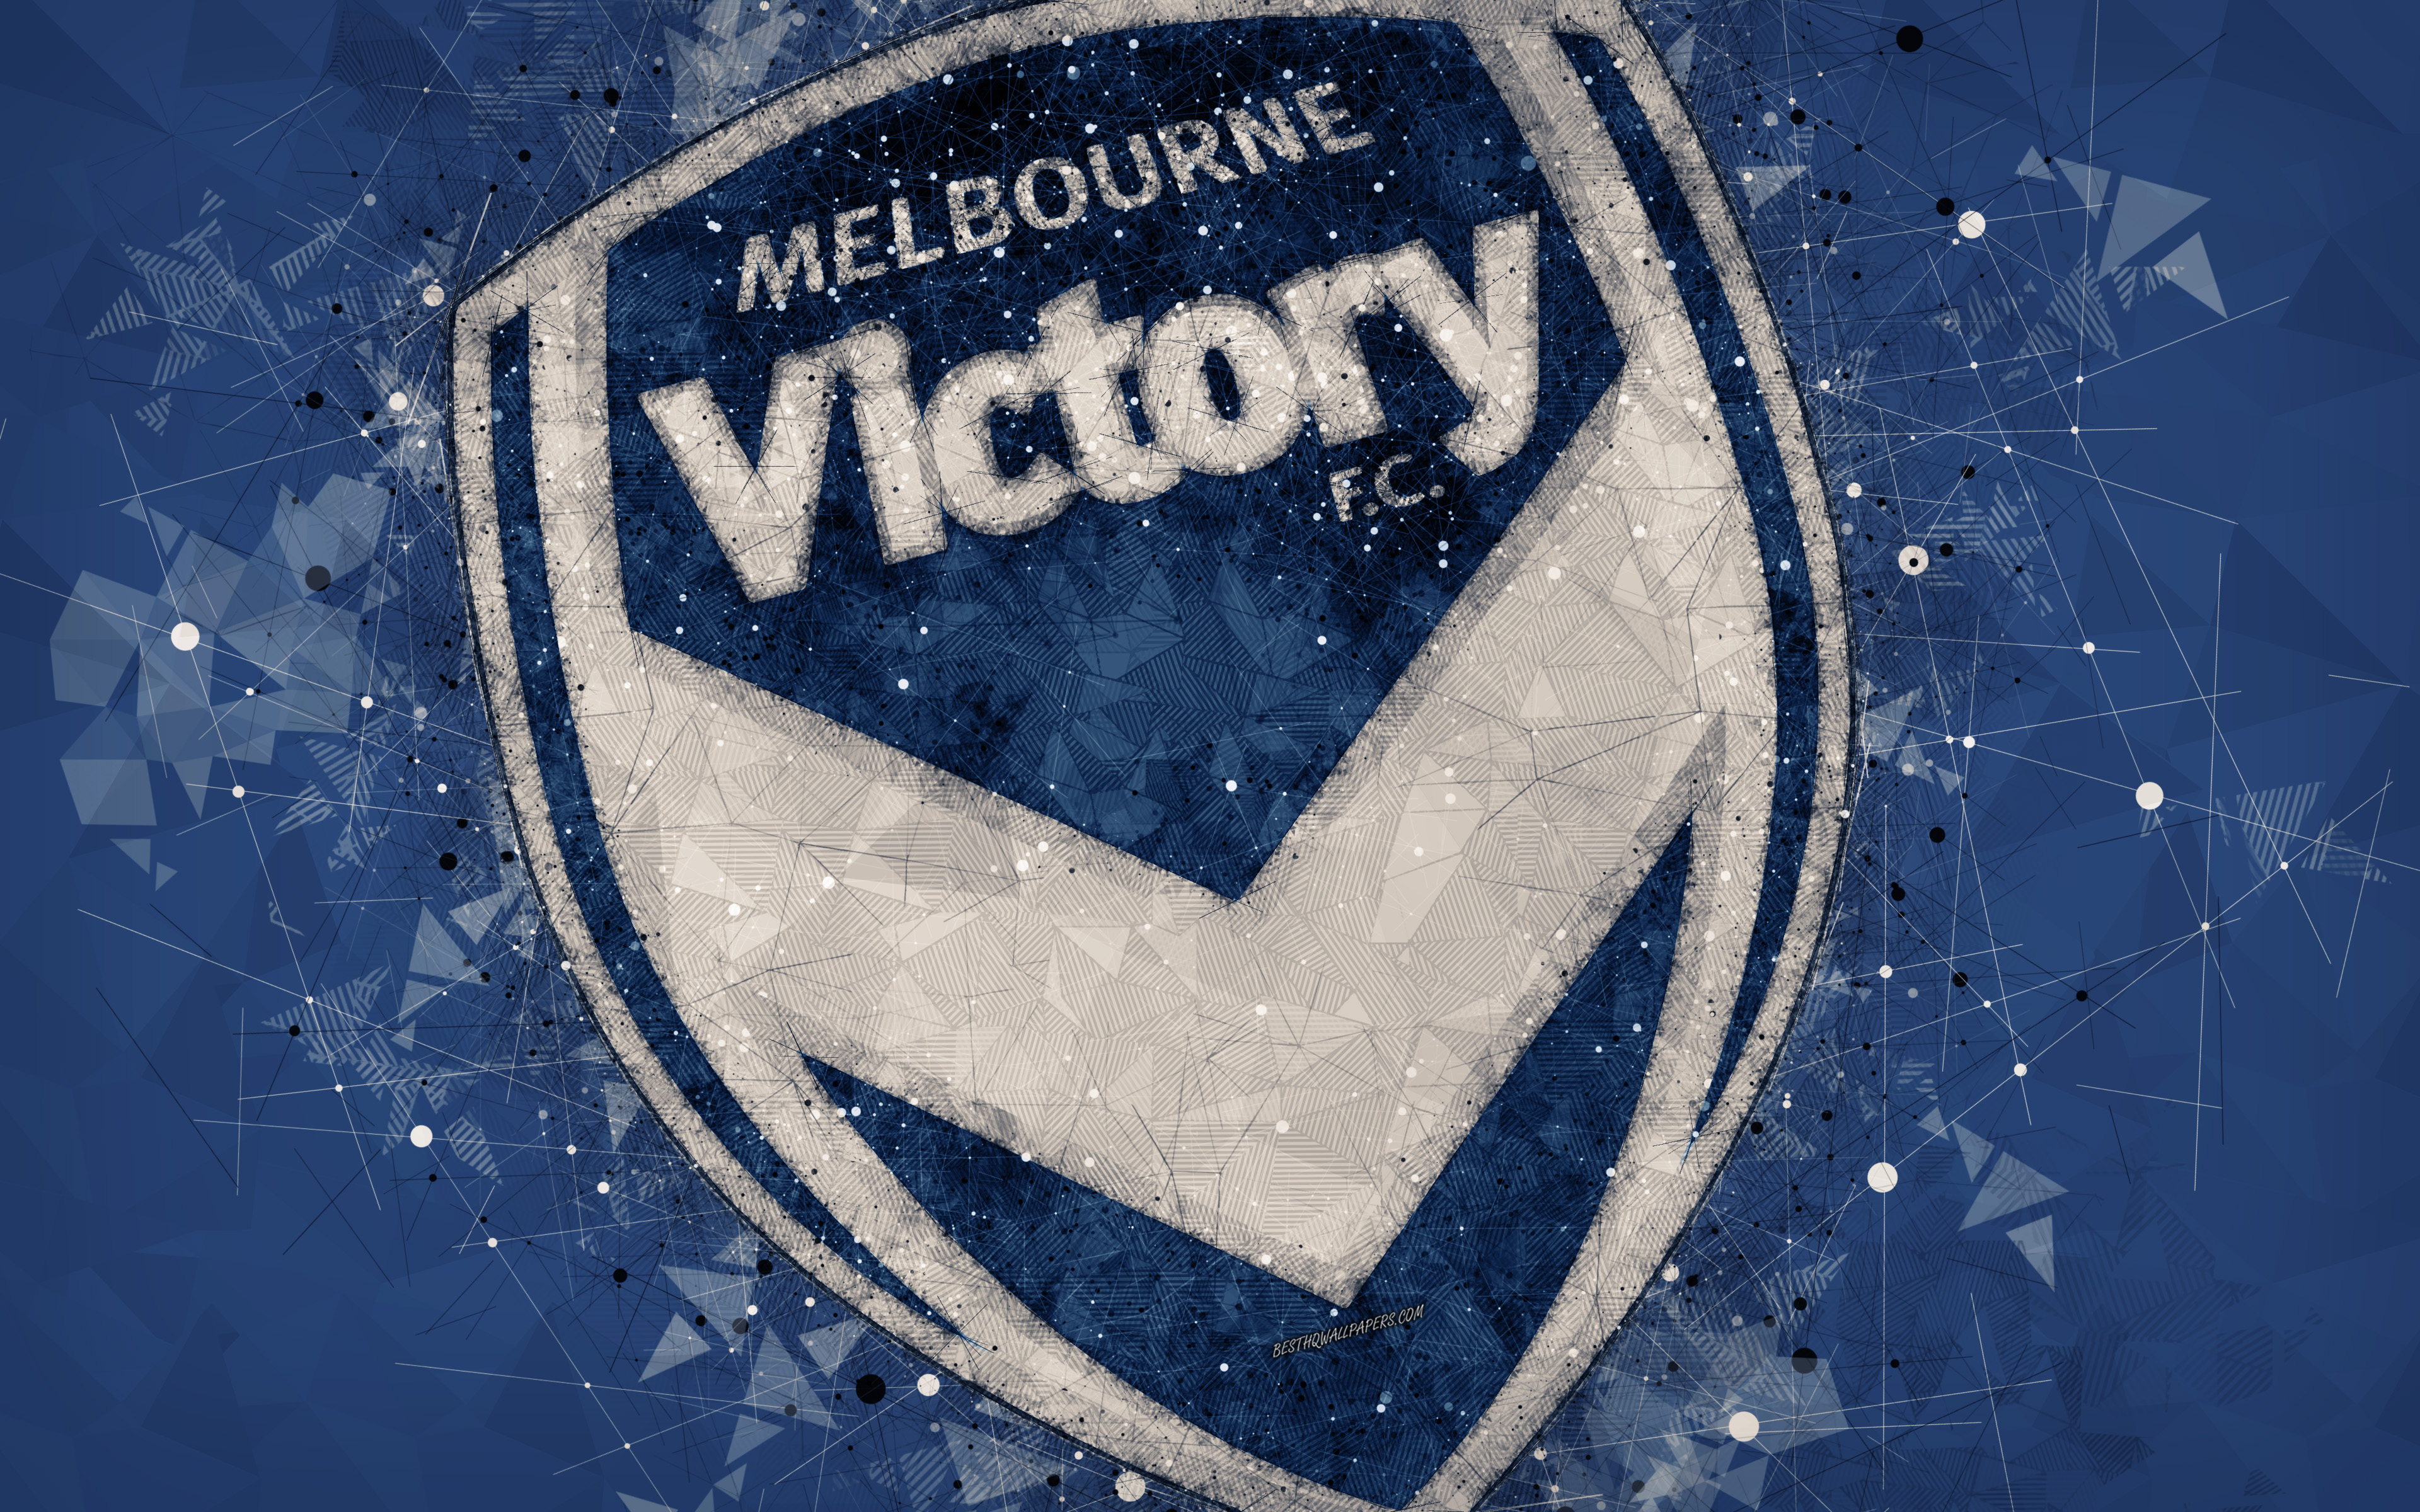 Melbourne Victory Fc 4k Ultra HD Wallpaper Background Image